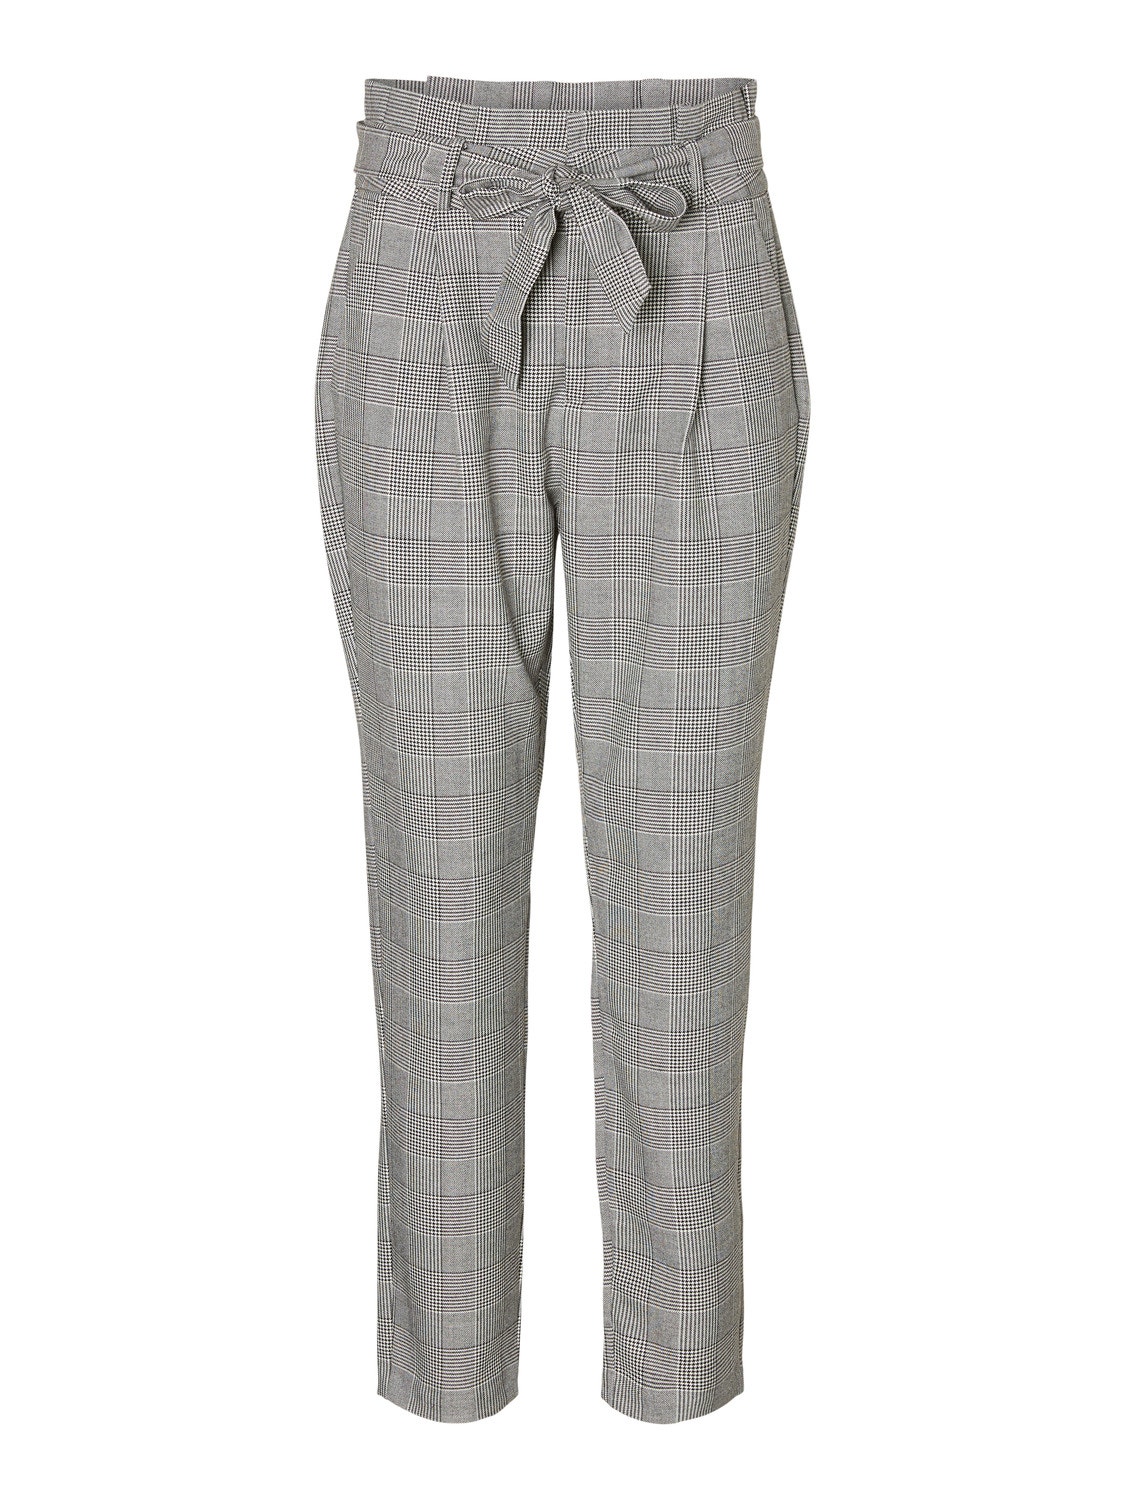 Vero Moda VMEVA Tiro alto Pantalones -Grey - 10209834